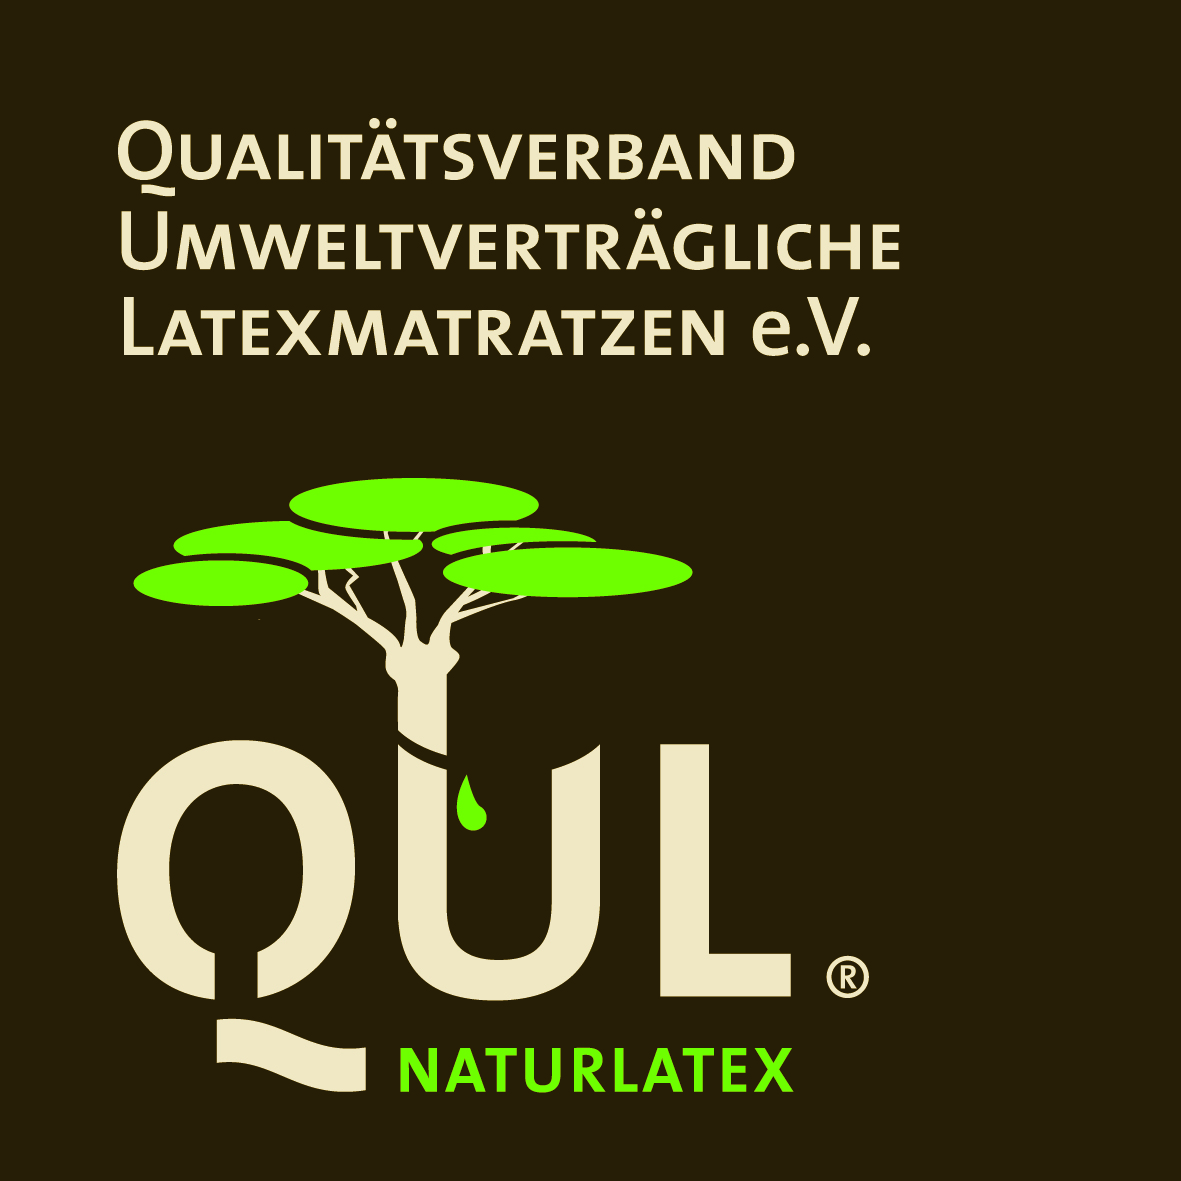 Certified by QUL as enivronmentally friendly mattress